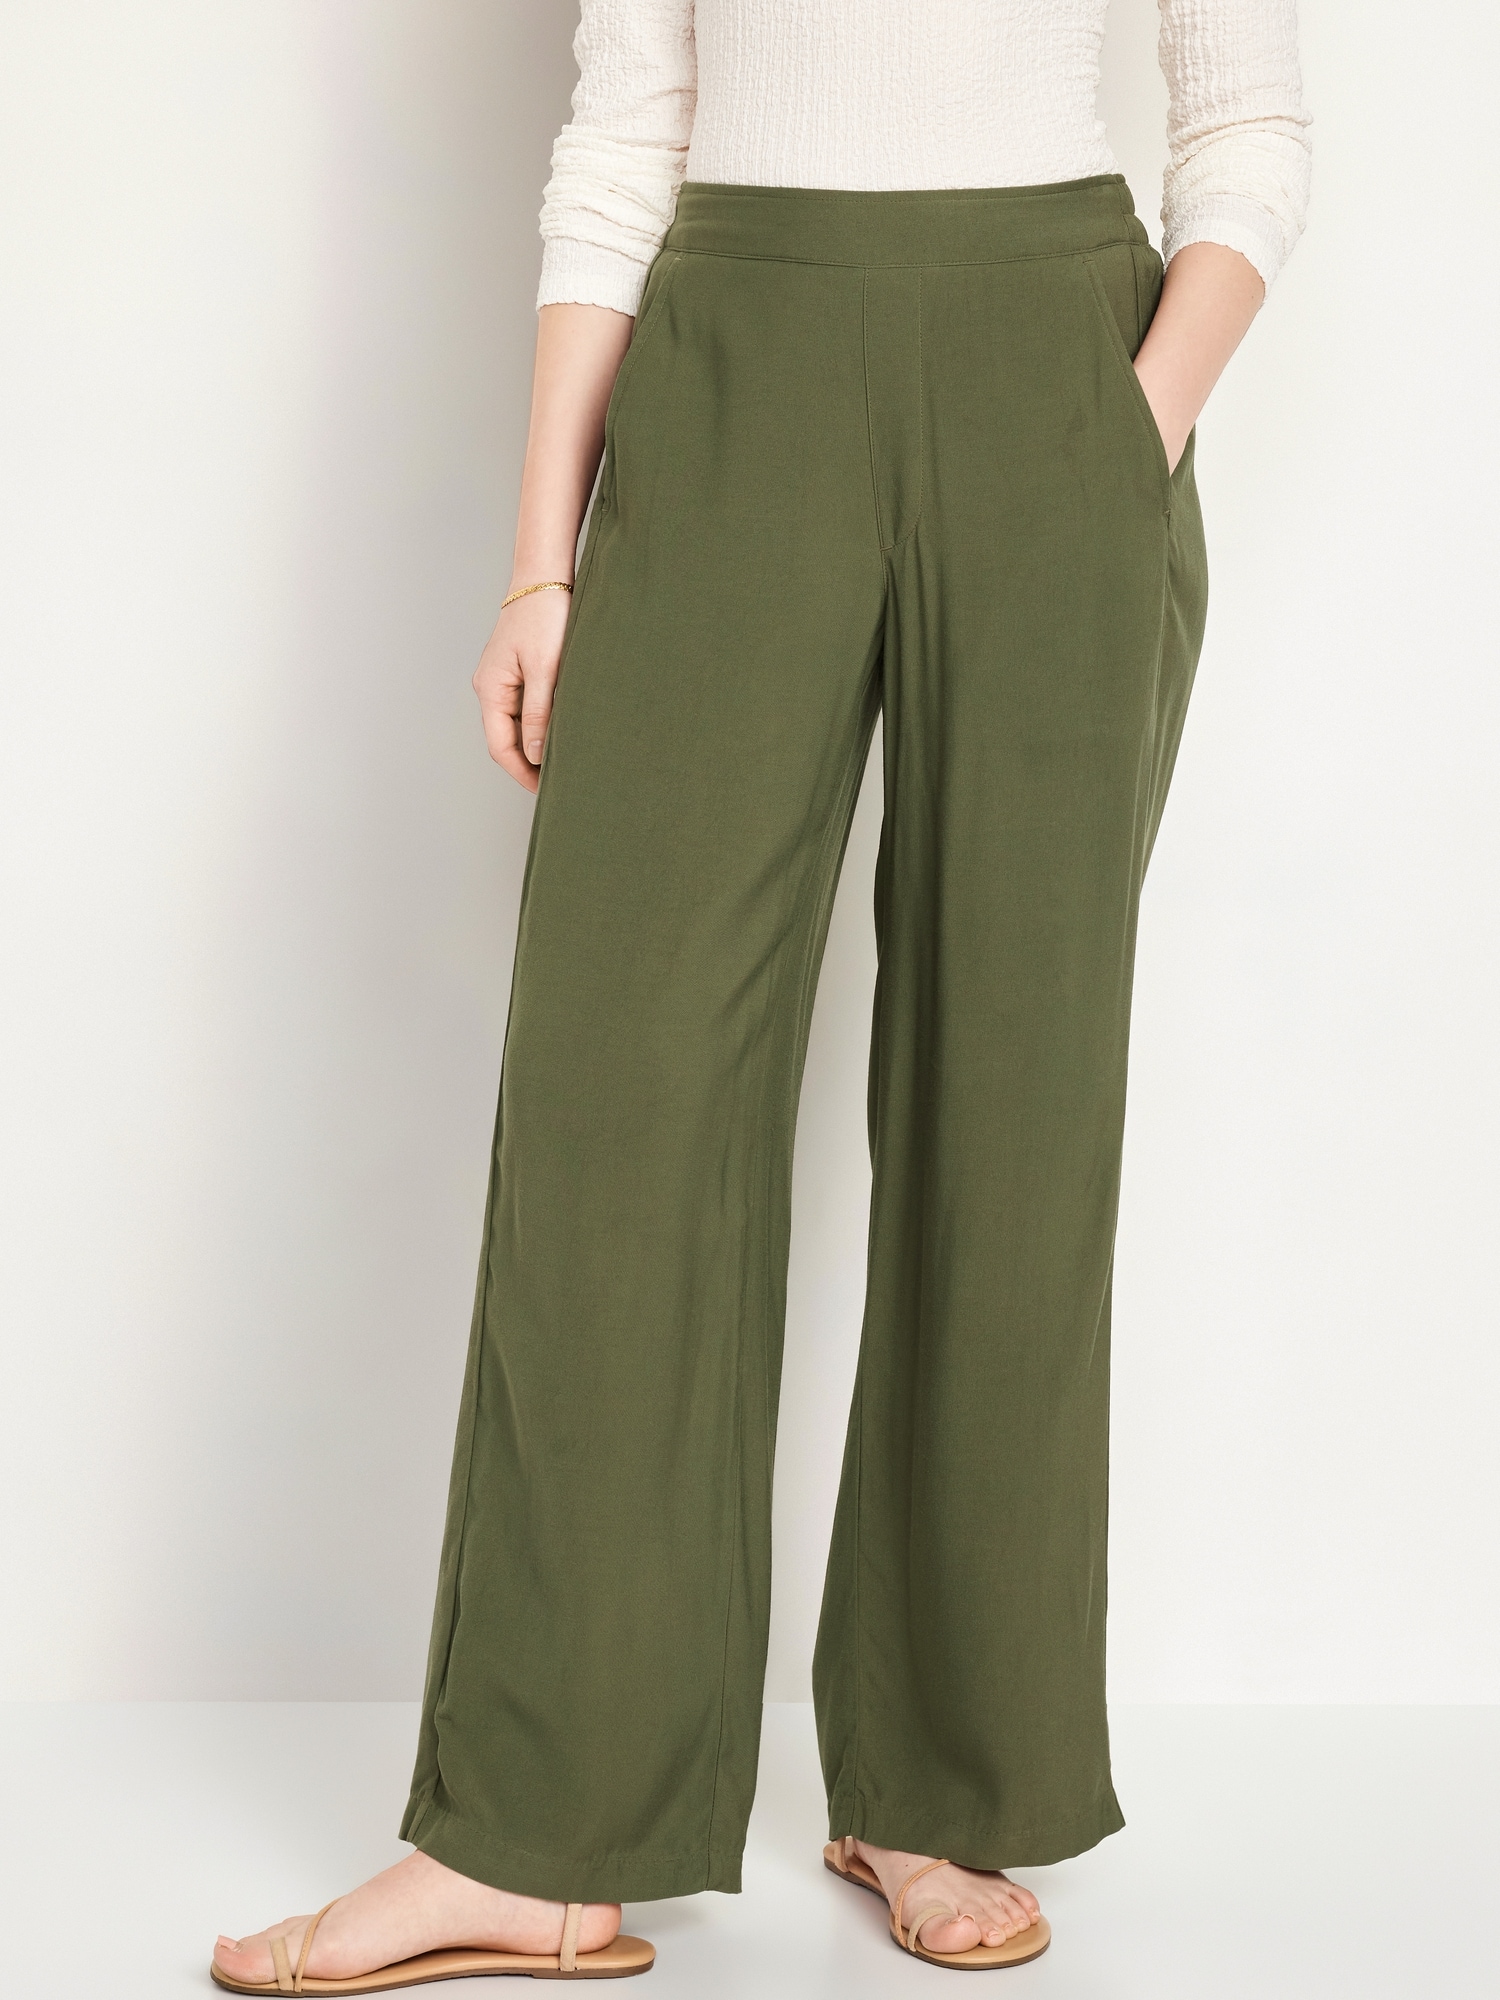 H&M High Waist Tapered Leg Utility Trouser Pants Olive Green Women's Size 8  | eBay